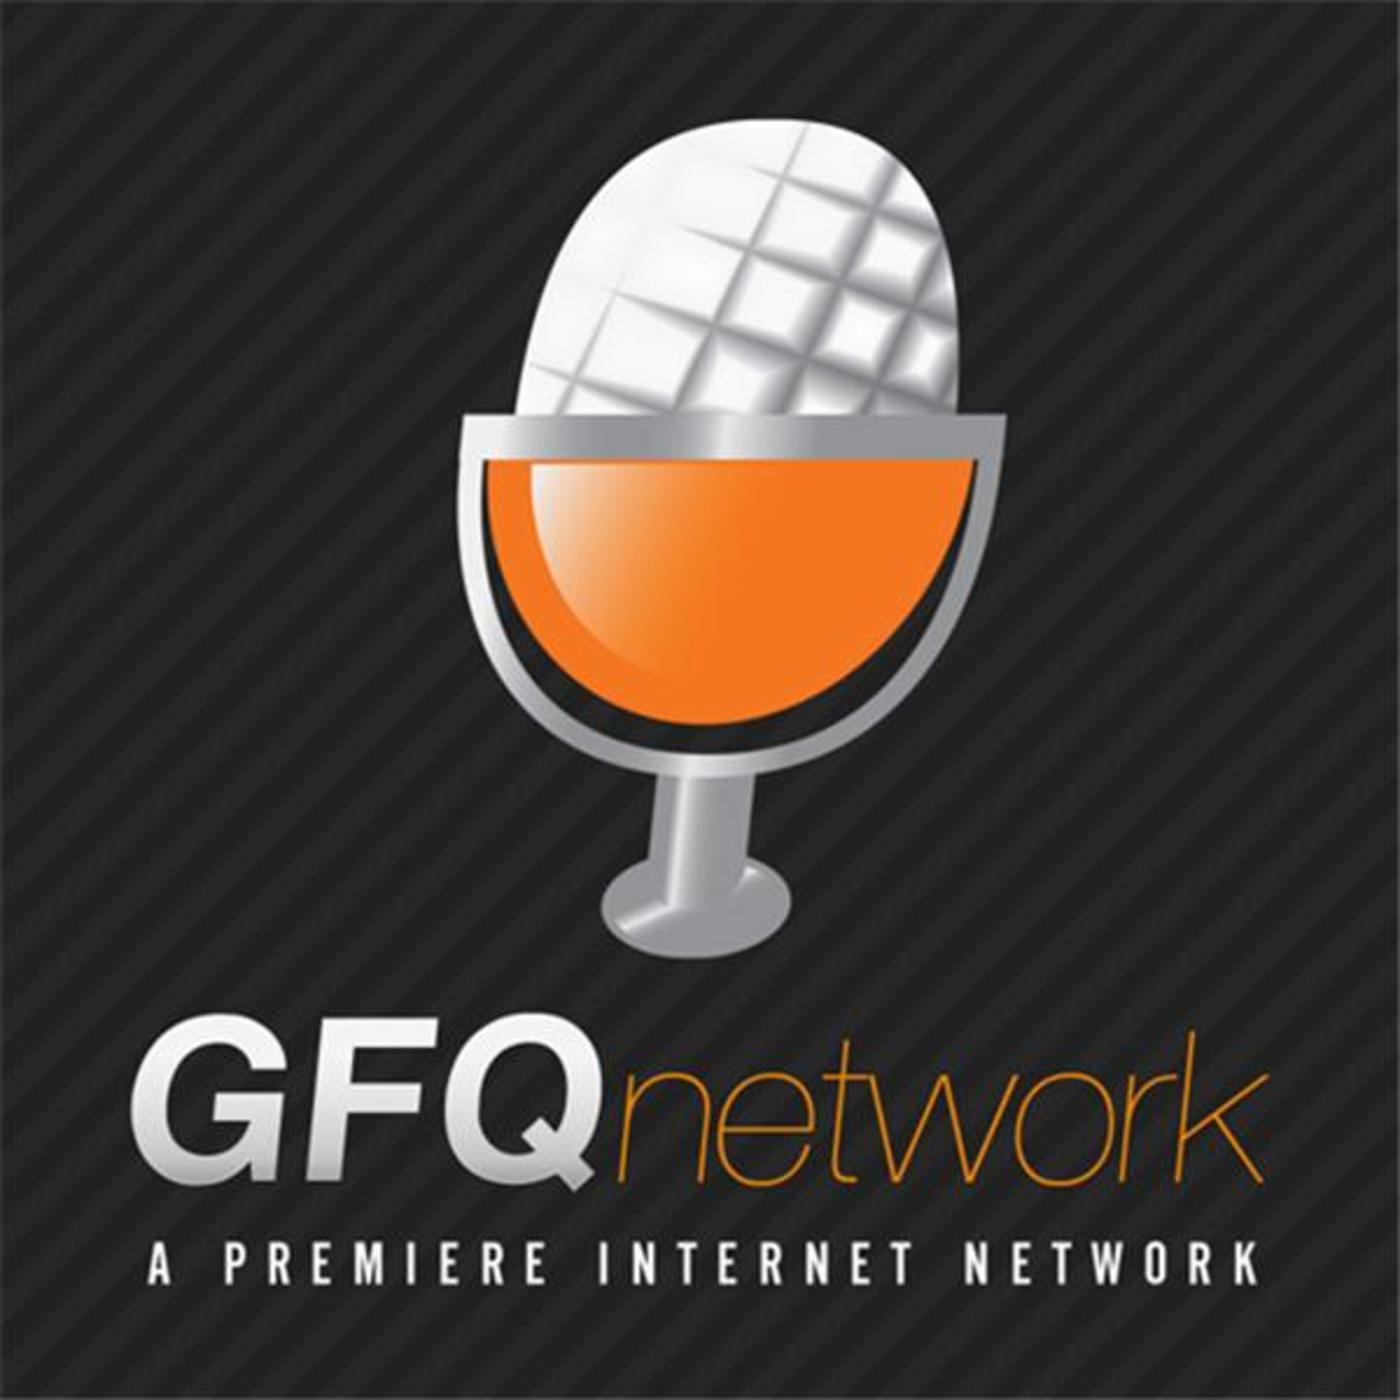 GFQ Network:GFQ Network